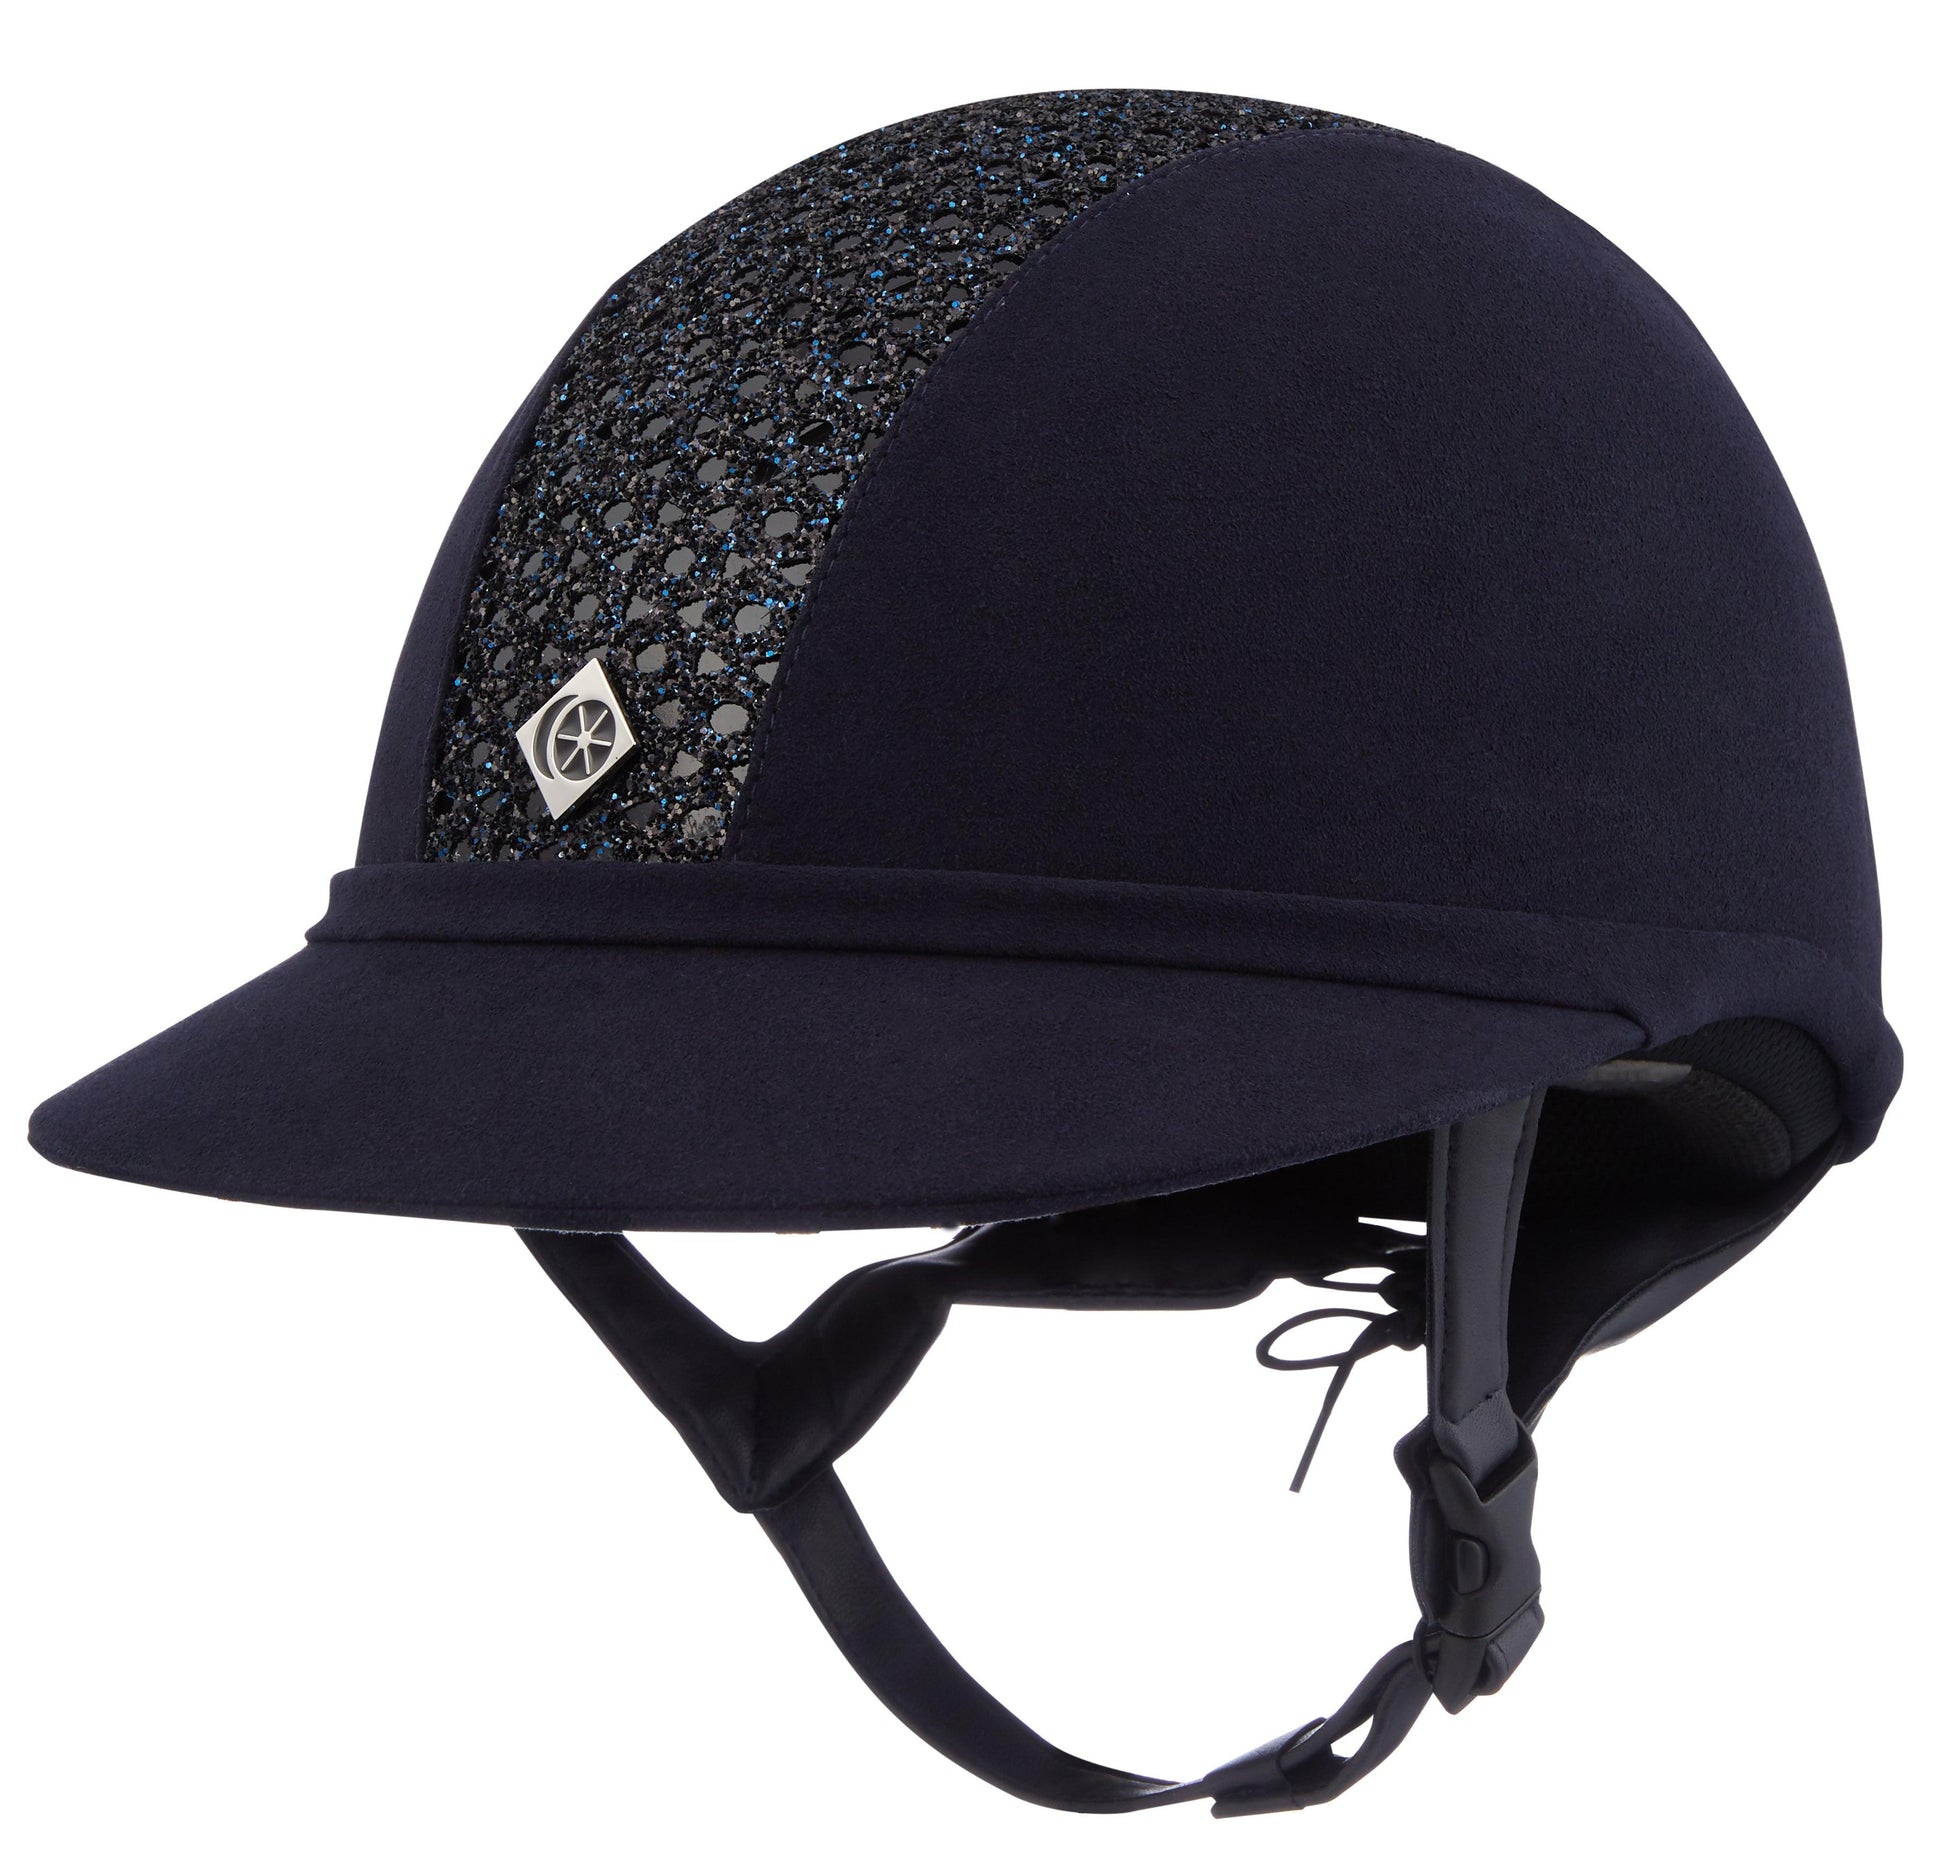 Charles Owen SP8 plus microsuede helmet with sparkly center - HorseworldEU